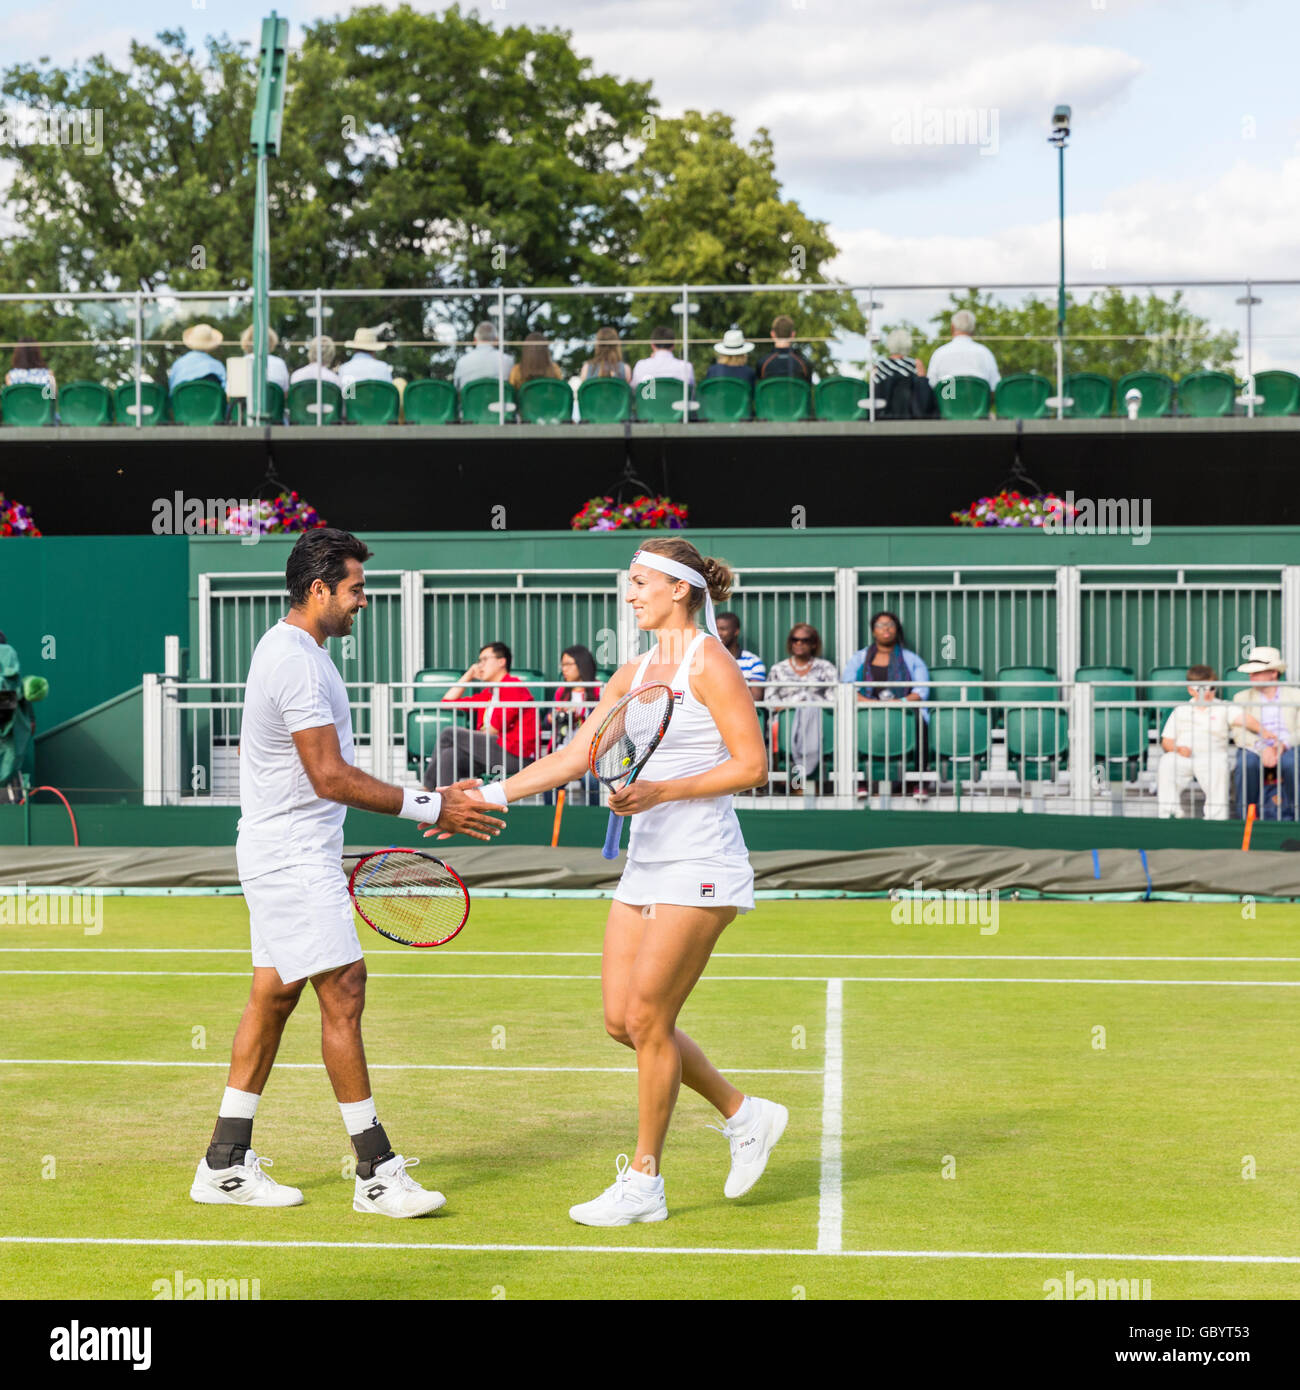 Mixed doubles players Aisam-ul-Haq Qureshi and Yaroslava Shvedova shake hands at the Wimbledon Tennis Championships 2016 Stock Photo